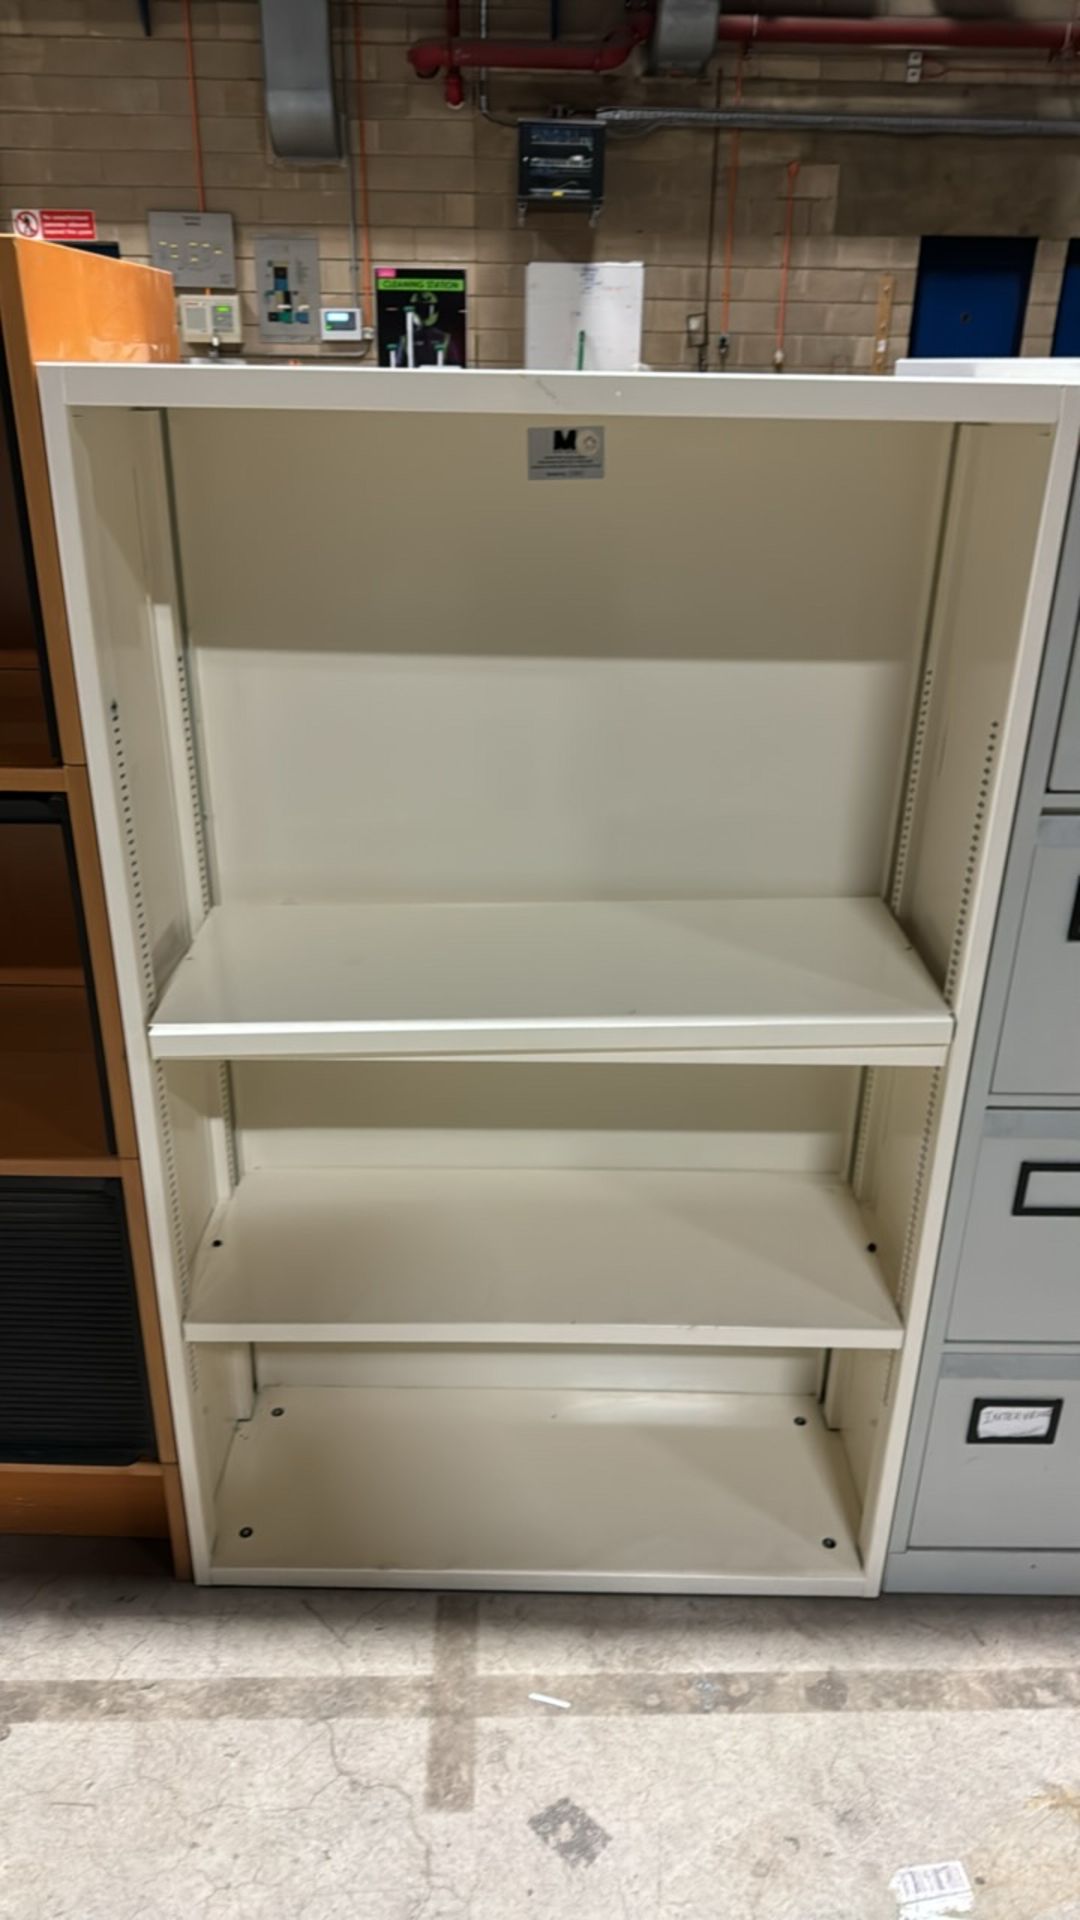 Shelf Storage Cabinets x2